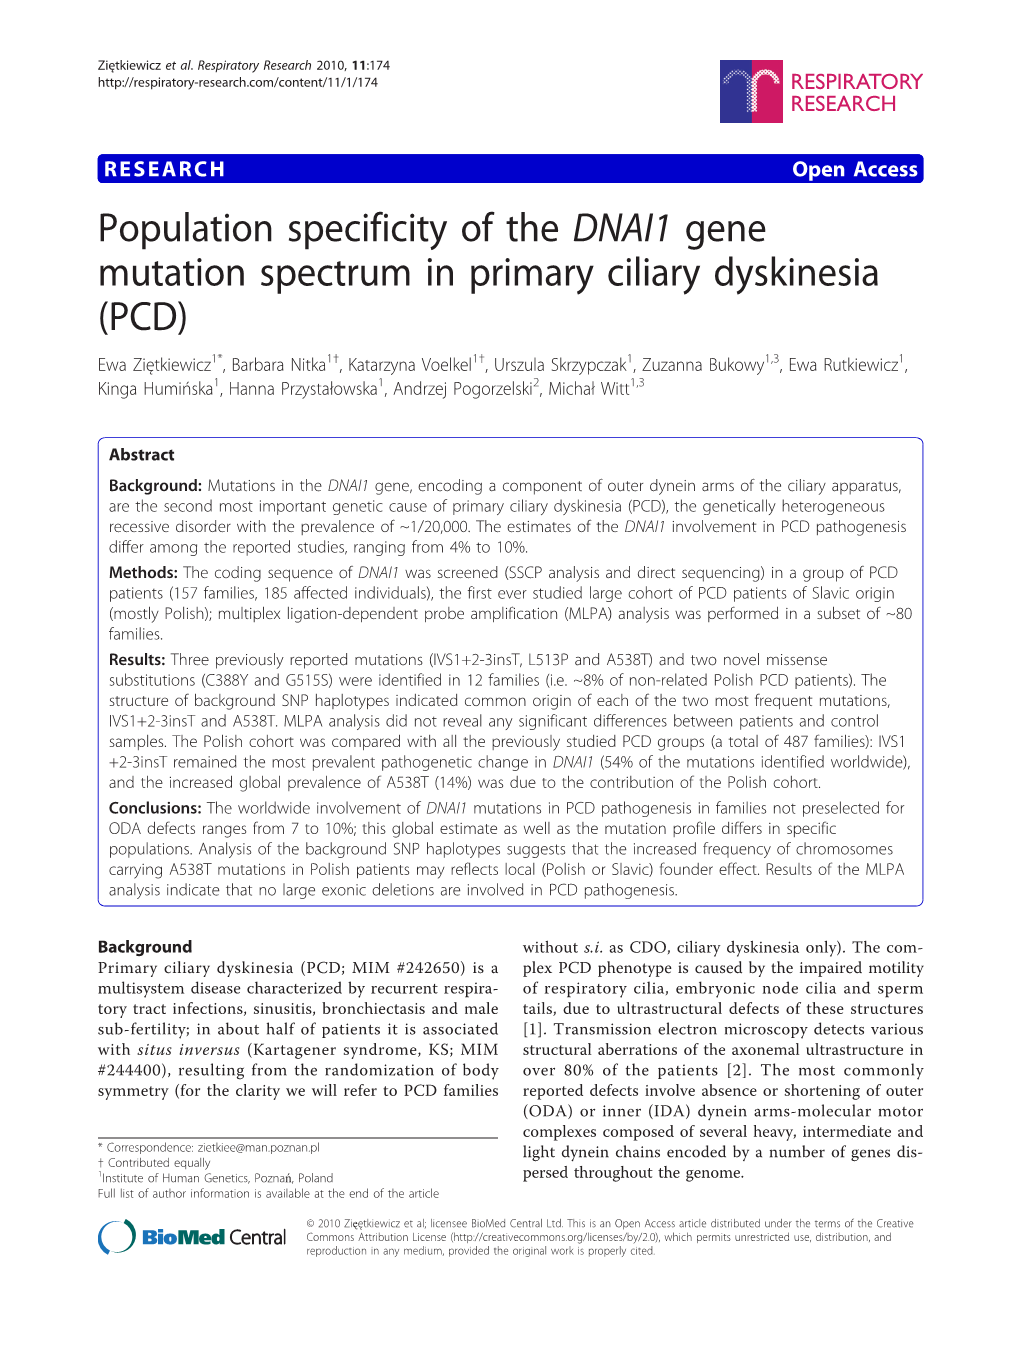 Population Specificity of the DNAI1 Gene Mutation